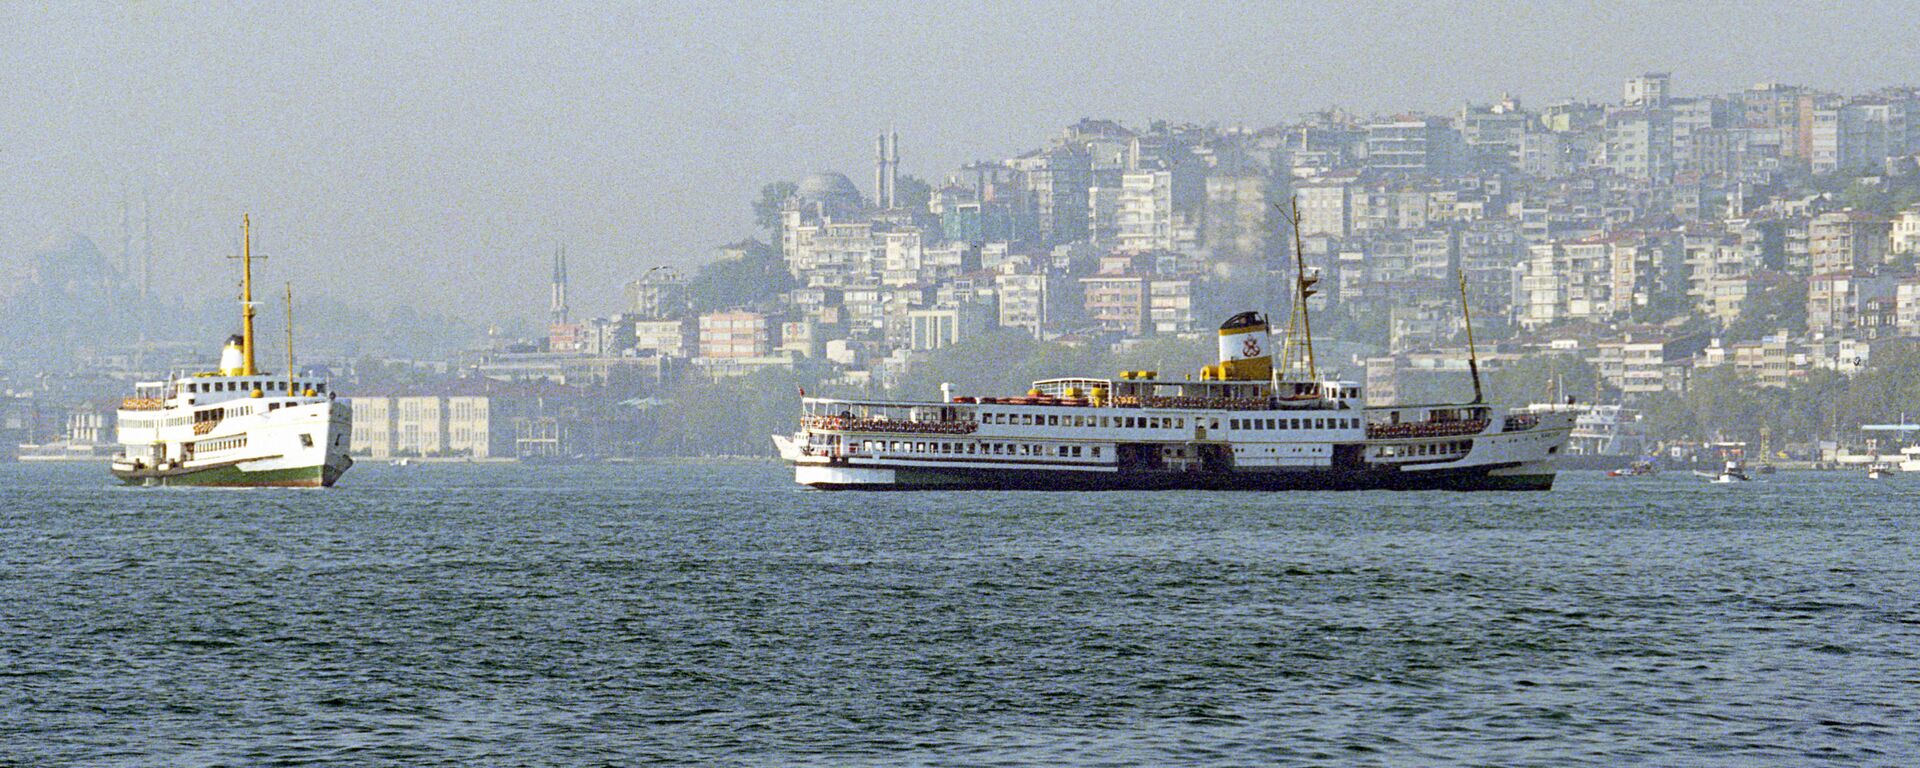 Вид на пролив Босфор в турецком городе Стамбуле. - Sputnik Молдова, 1920, 28.05.2021